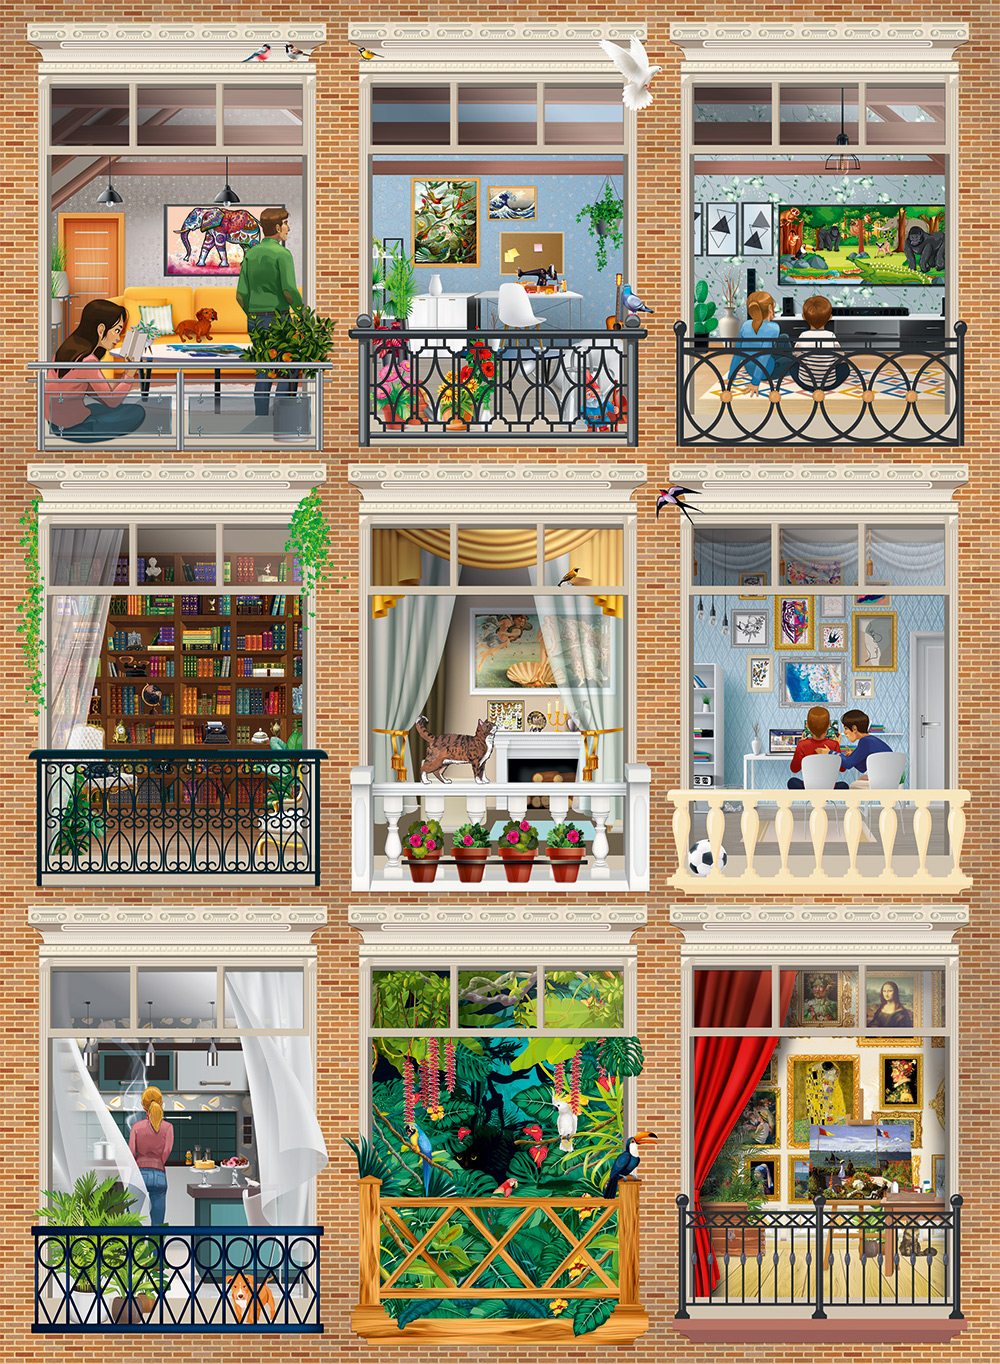 Dino Jigsaw Puzzle Amsterdam 3000 pièces pour adultes